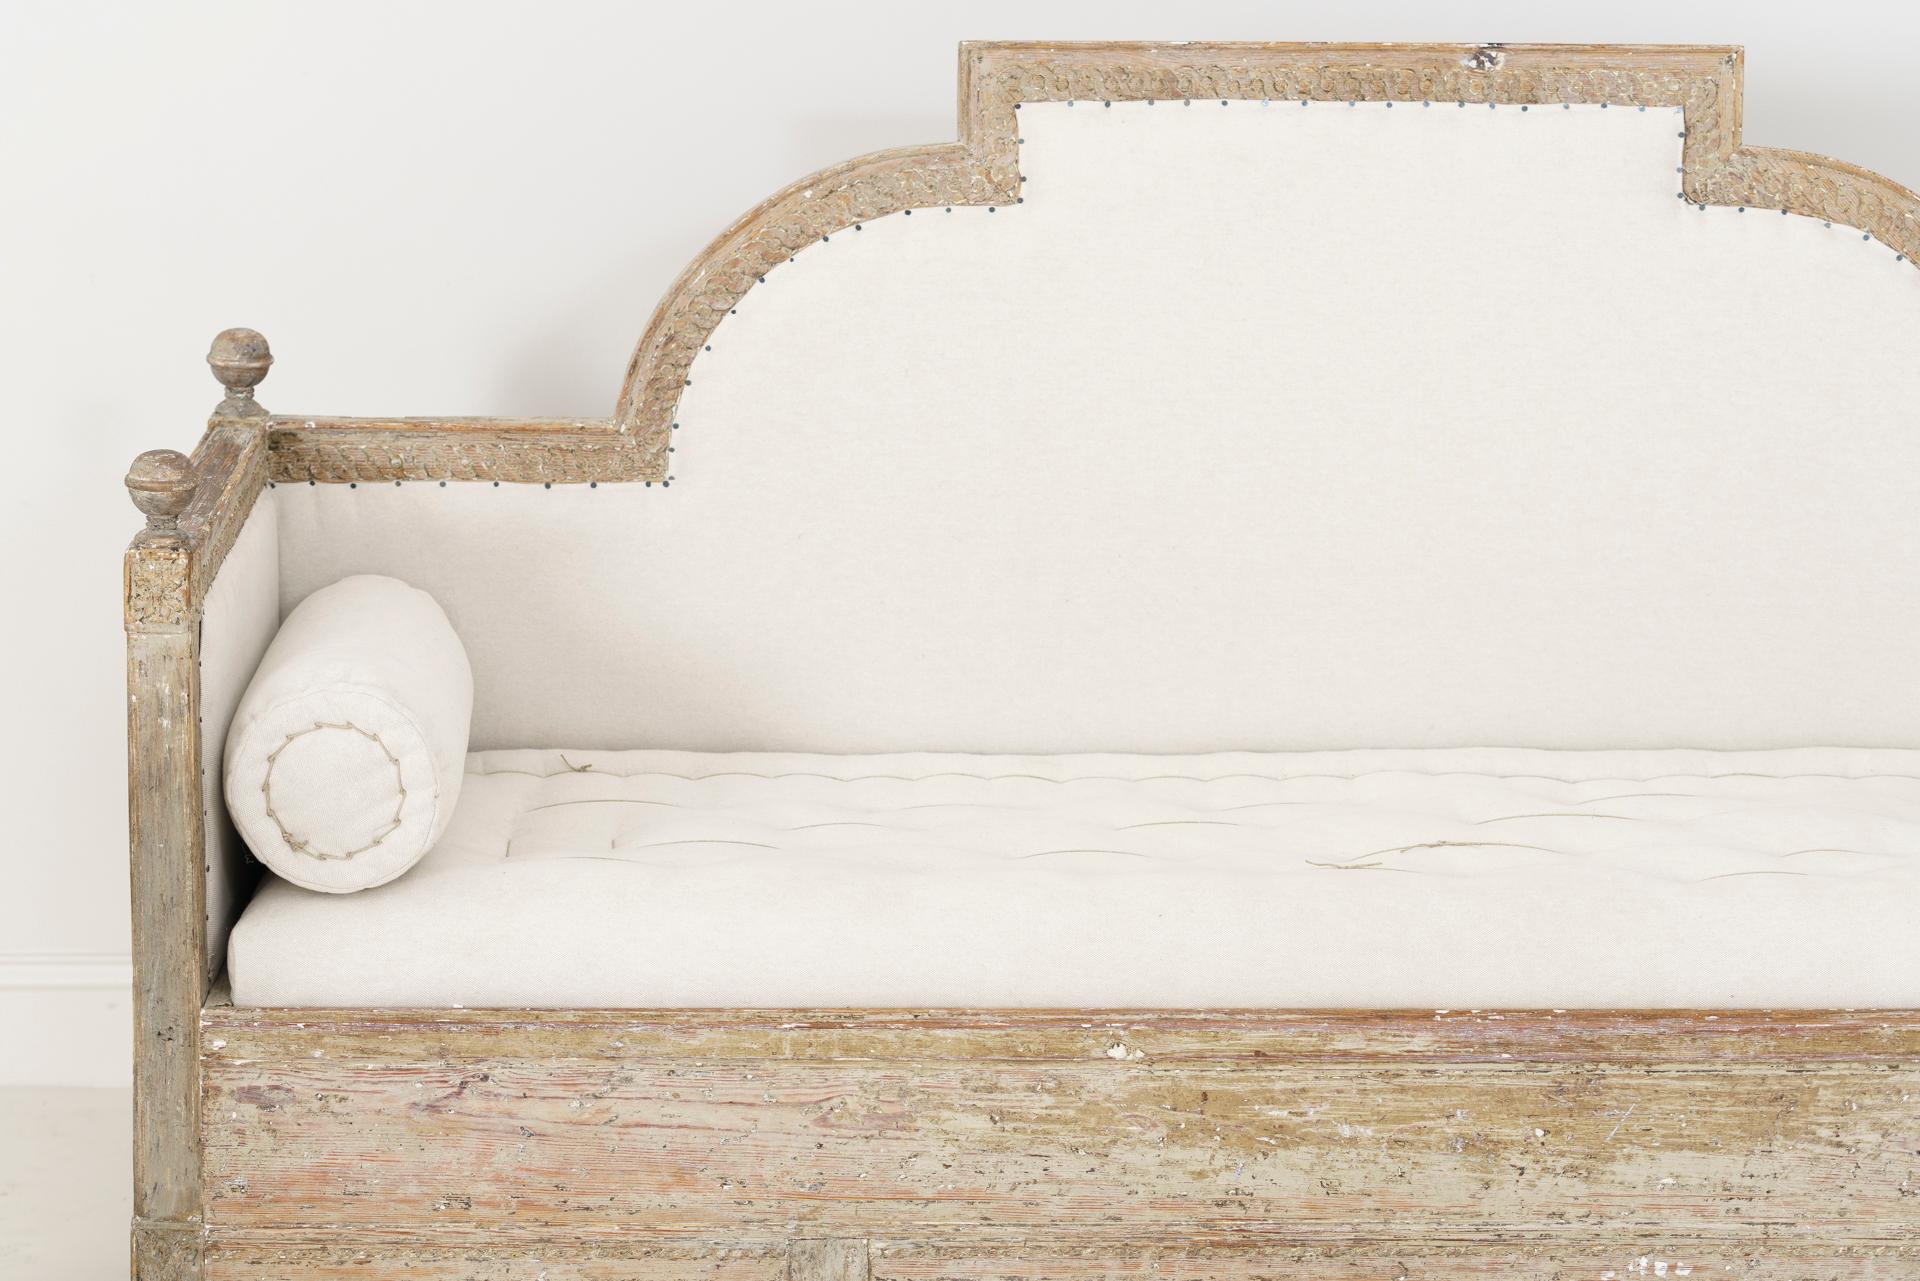 Hand-Crafted 19th Century Swedish Gustavian Period Sofa Bench in Original Paint